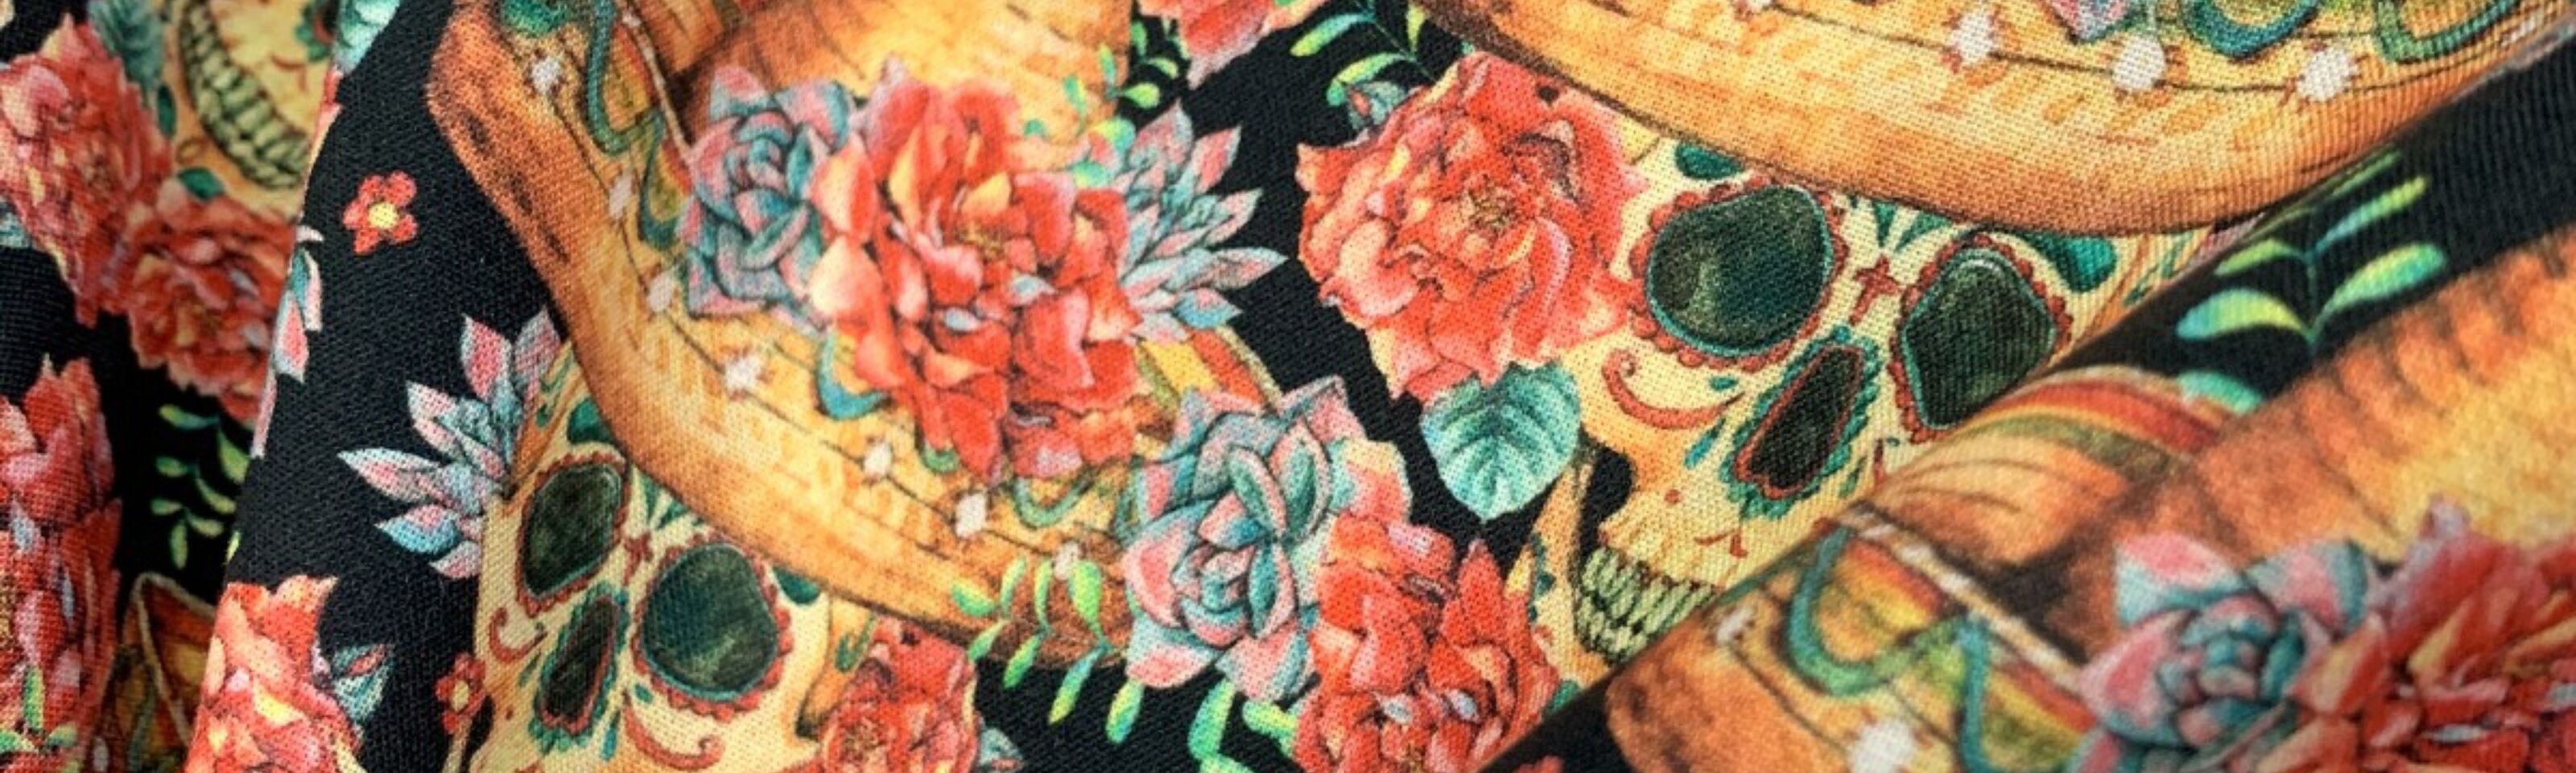 True Craft - Skulls - John Louden Korean Crafting Fabric - Black, Orange, Red, Tattoo, Floral - Fold